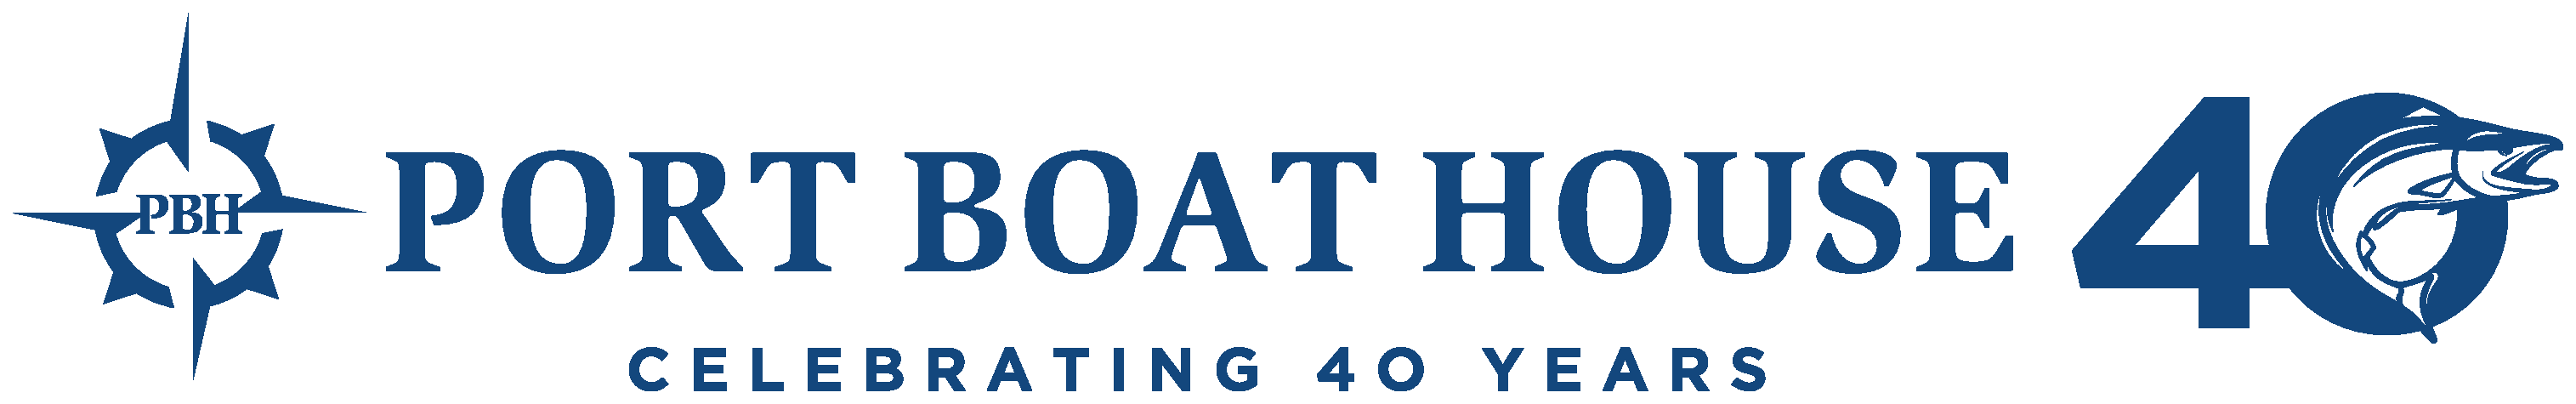 Port-Boat-House_Logo_40th_Horizontal_4c_Blue